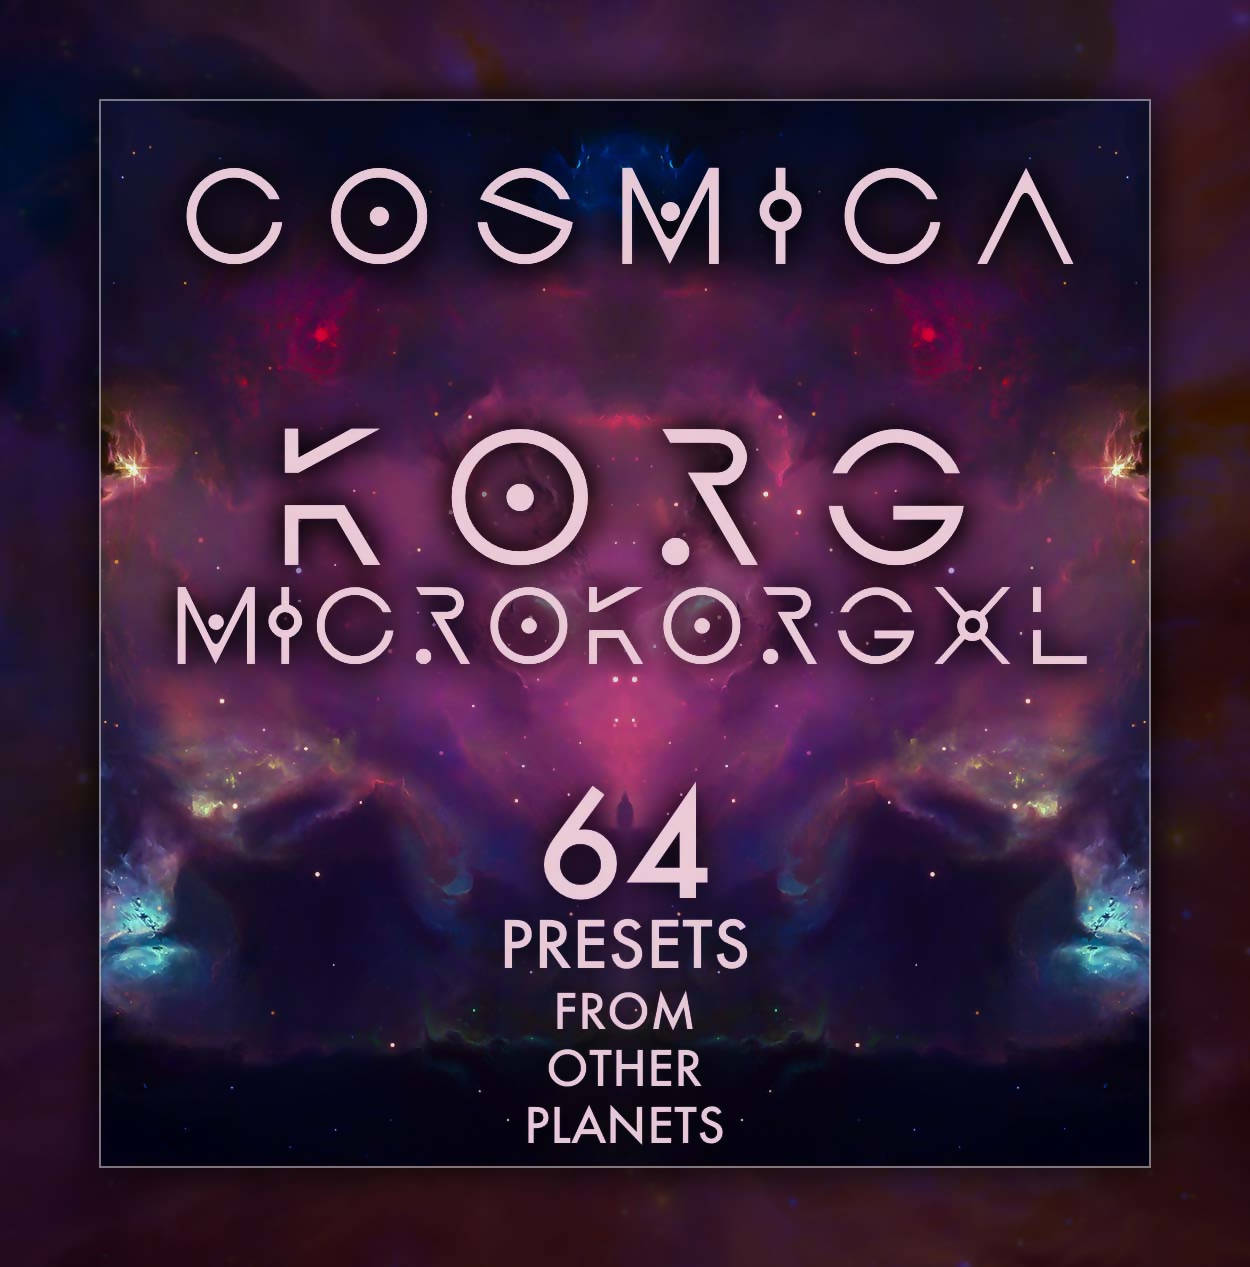 Microkorg XL - Cosmica